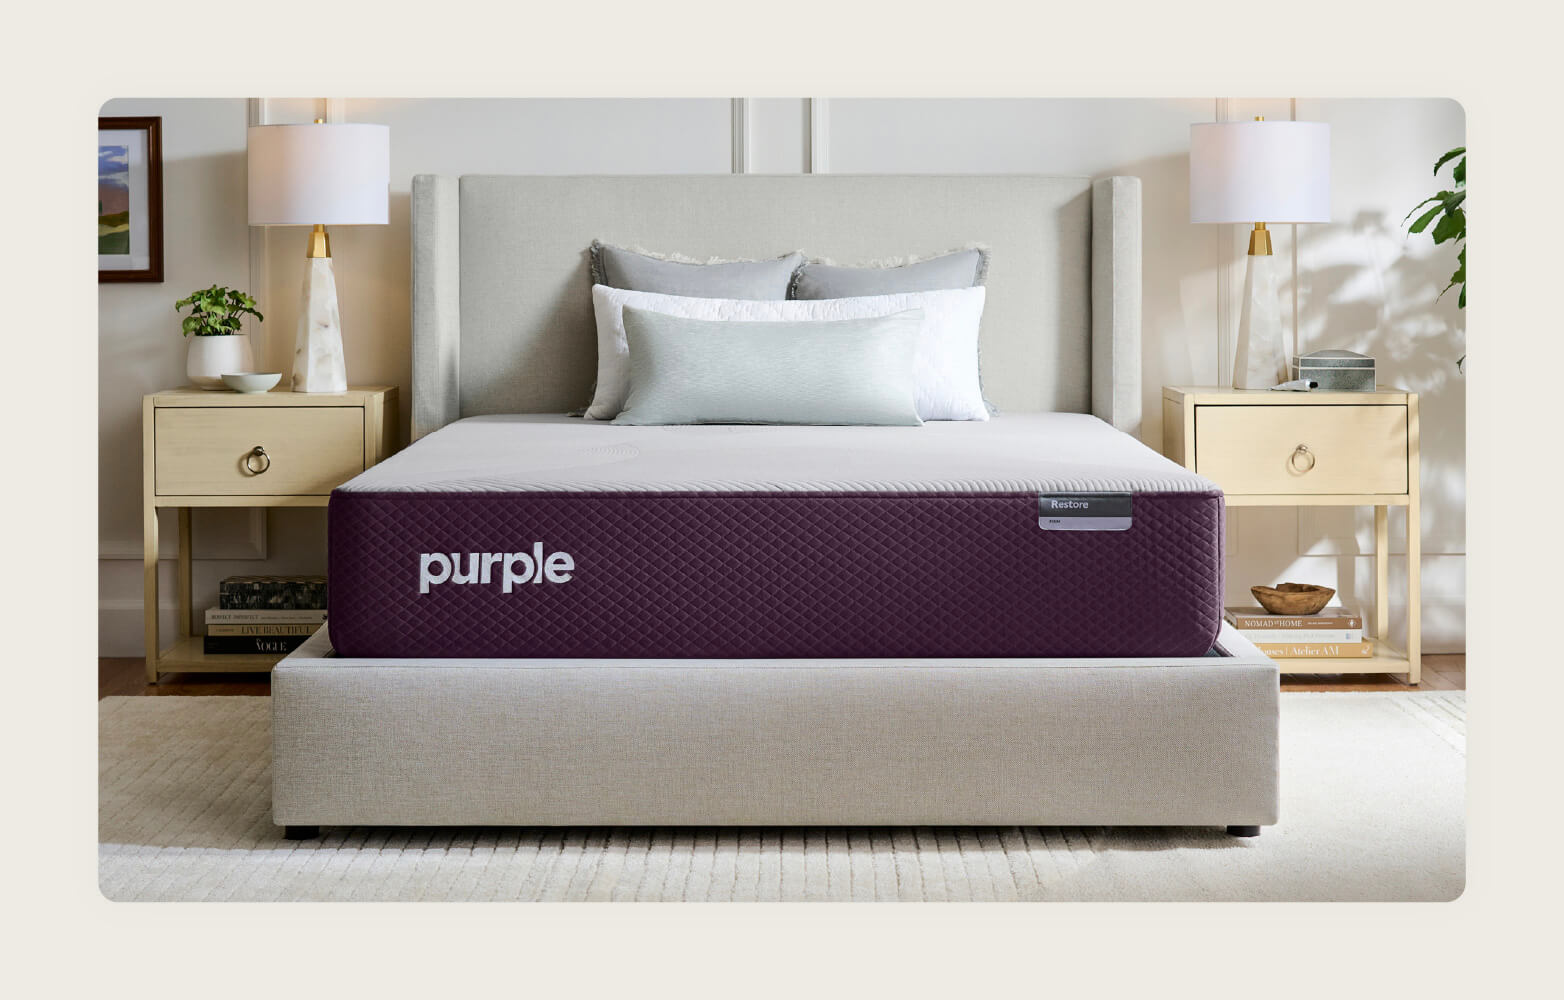 Photo of a Purple Restore Hybrid mattress in a neutral bedroom.